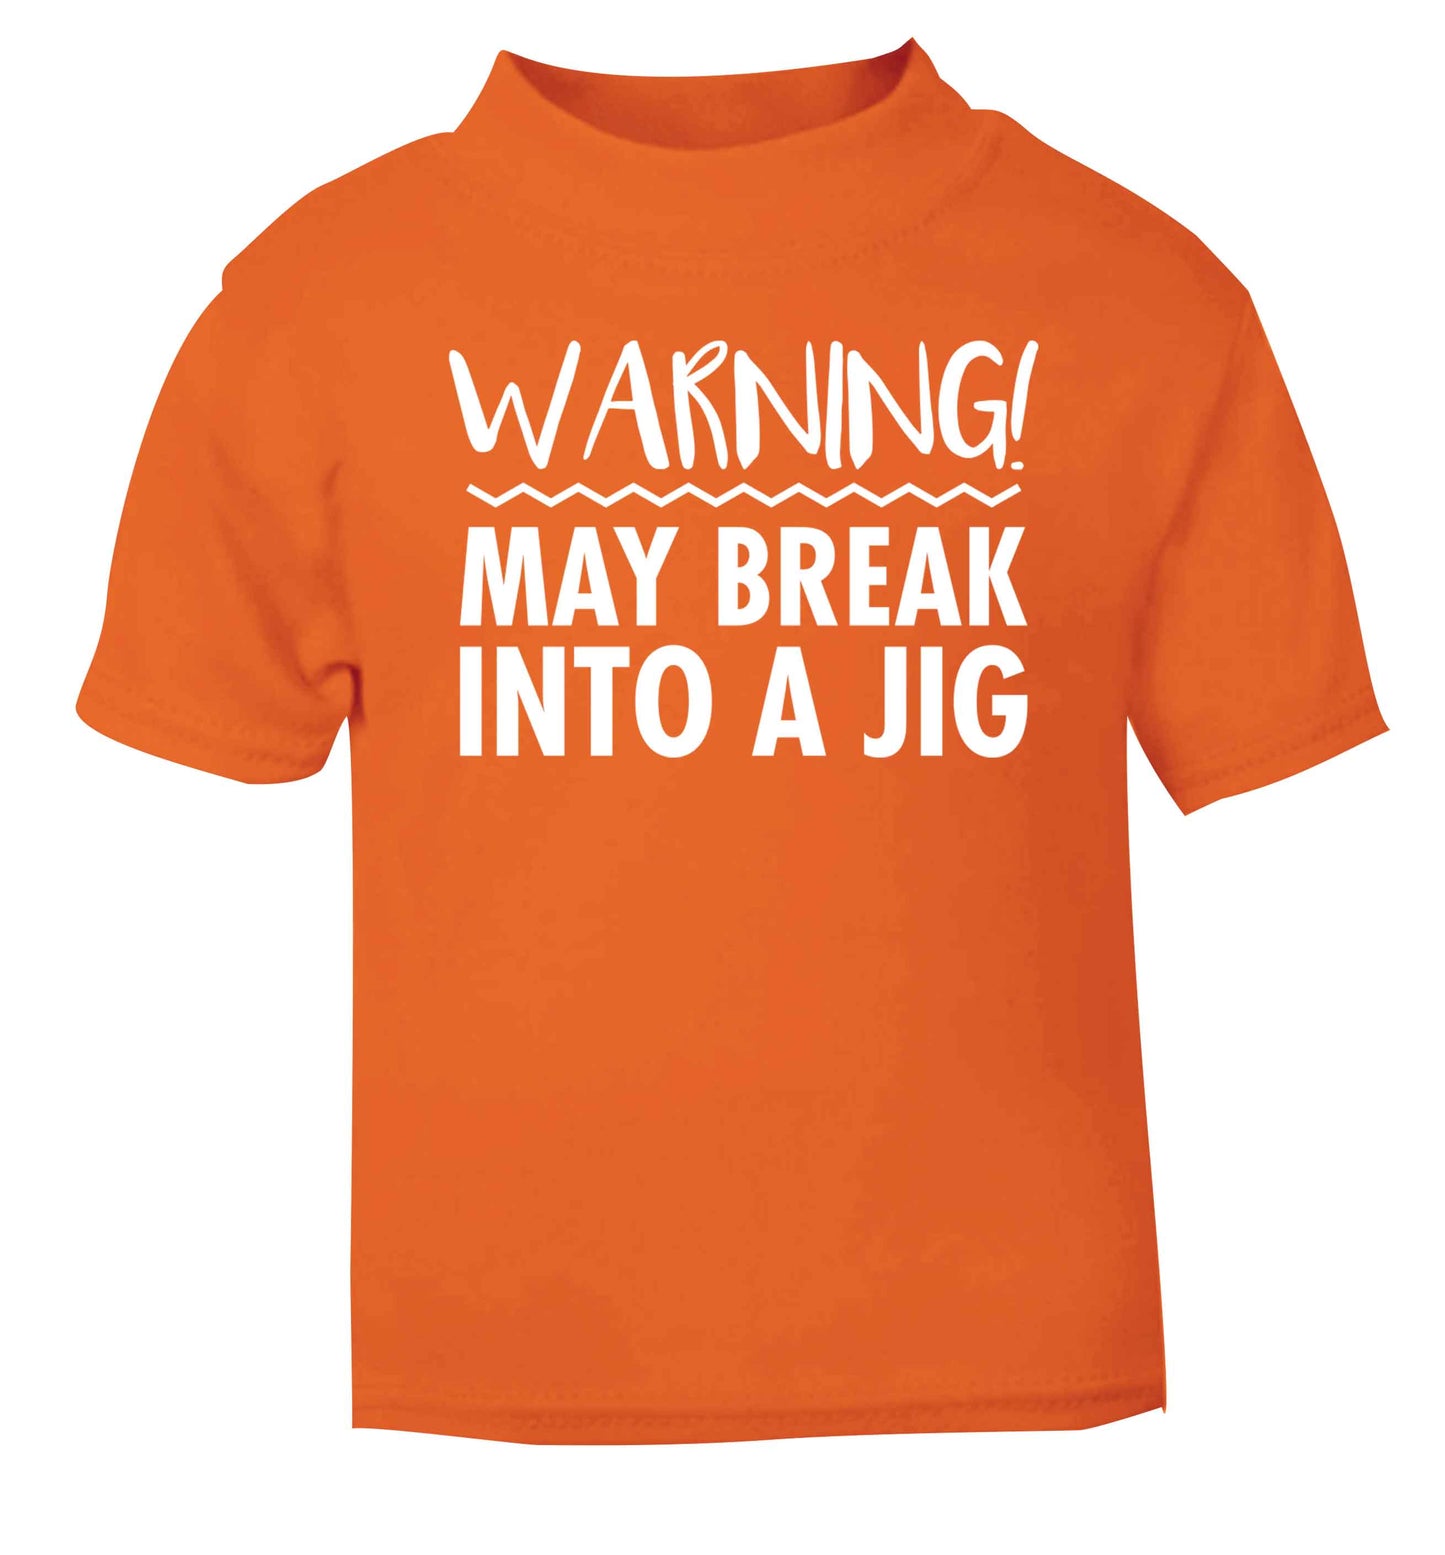 Warning may break into a jig orange baby toddler Tshirt 2 Years